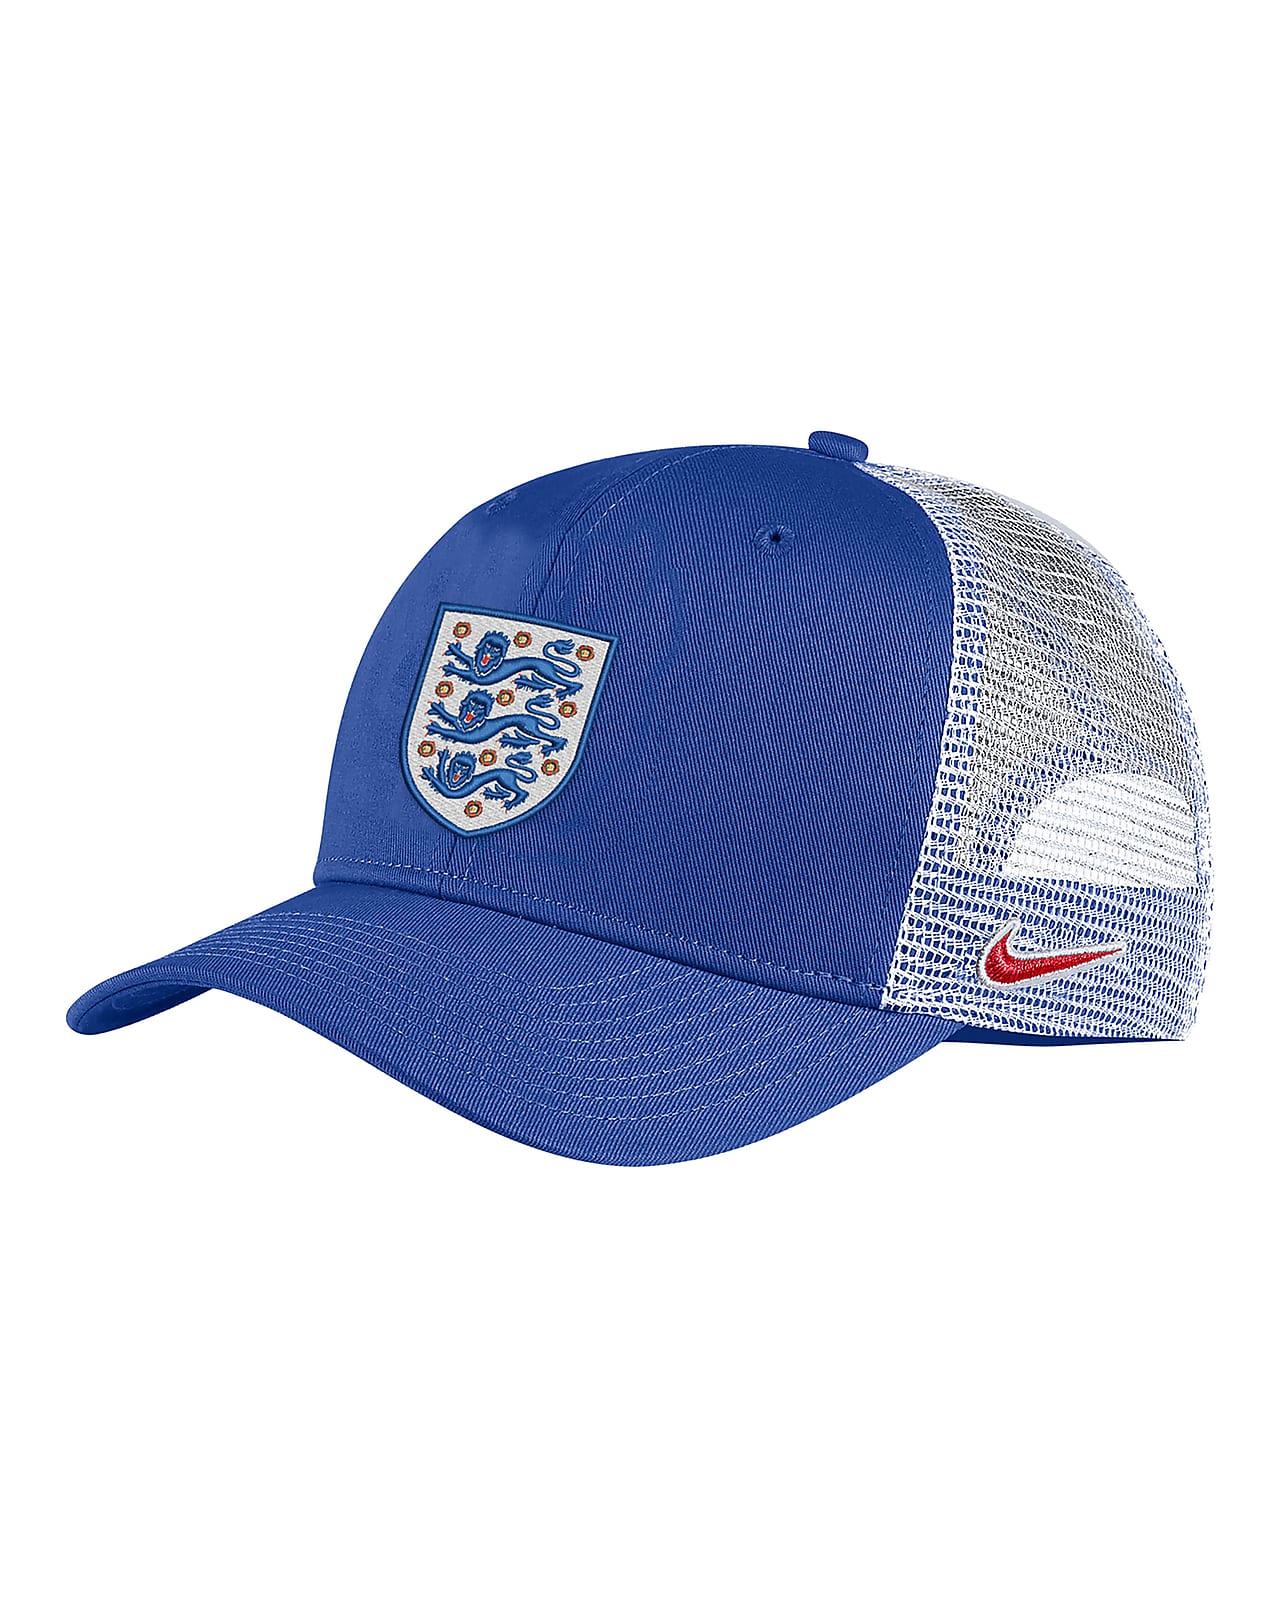 England Classic 99 Men's Nike Trucker Hat